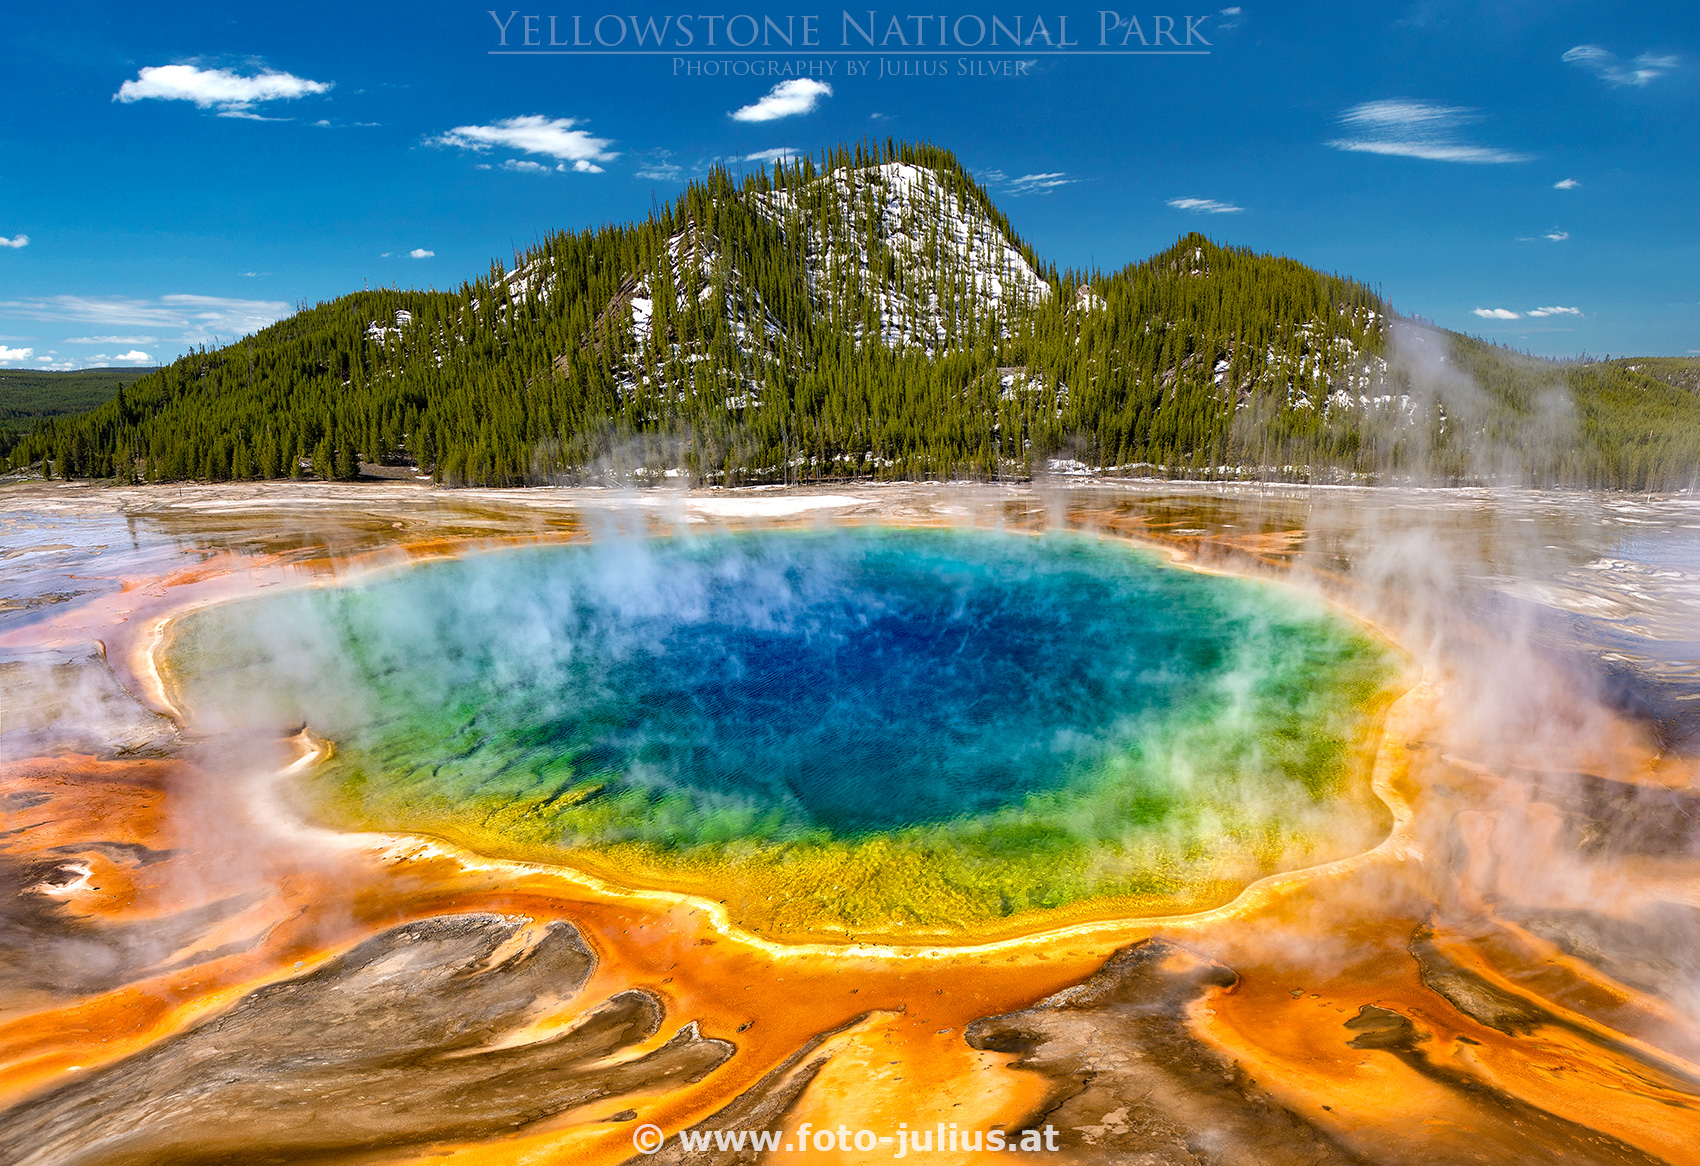 411a_Yellowstone_National_Park.jpg, 1,0MB